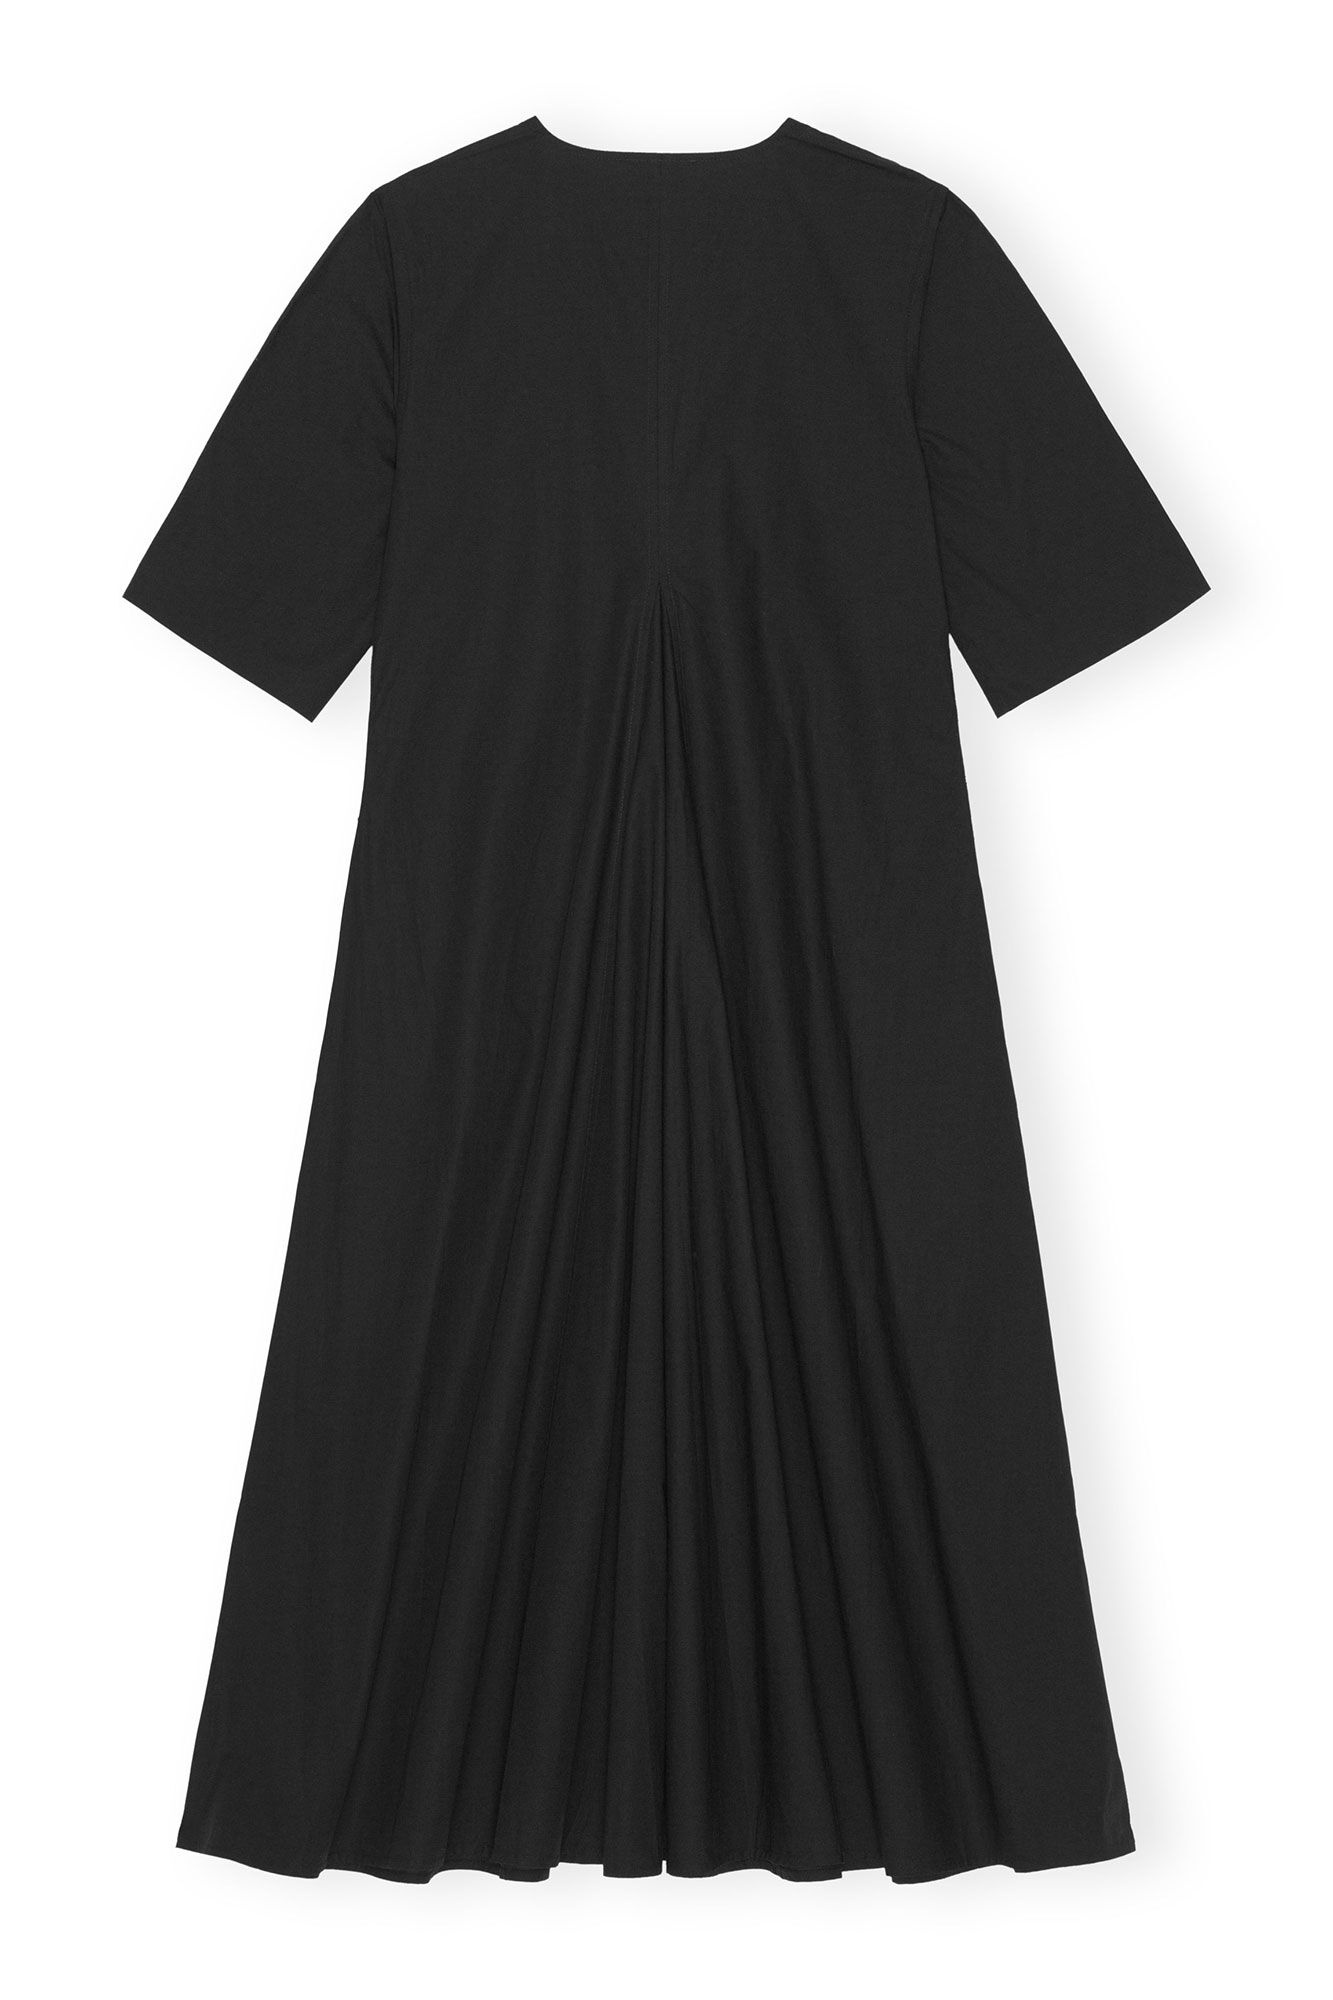 EXCLUSIVE BLACK COTTON POPLIN MAXI DRESS - 2